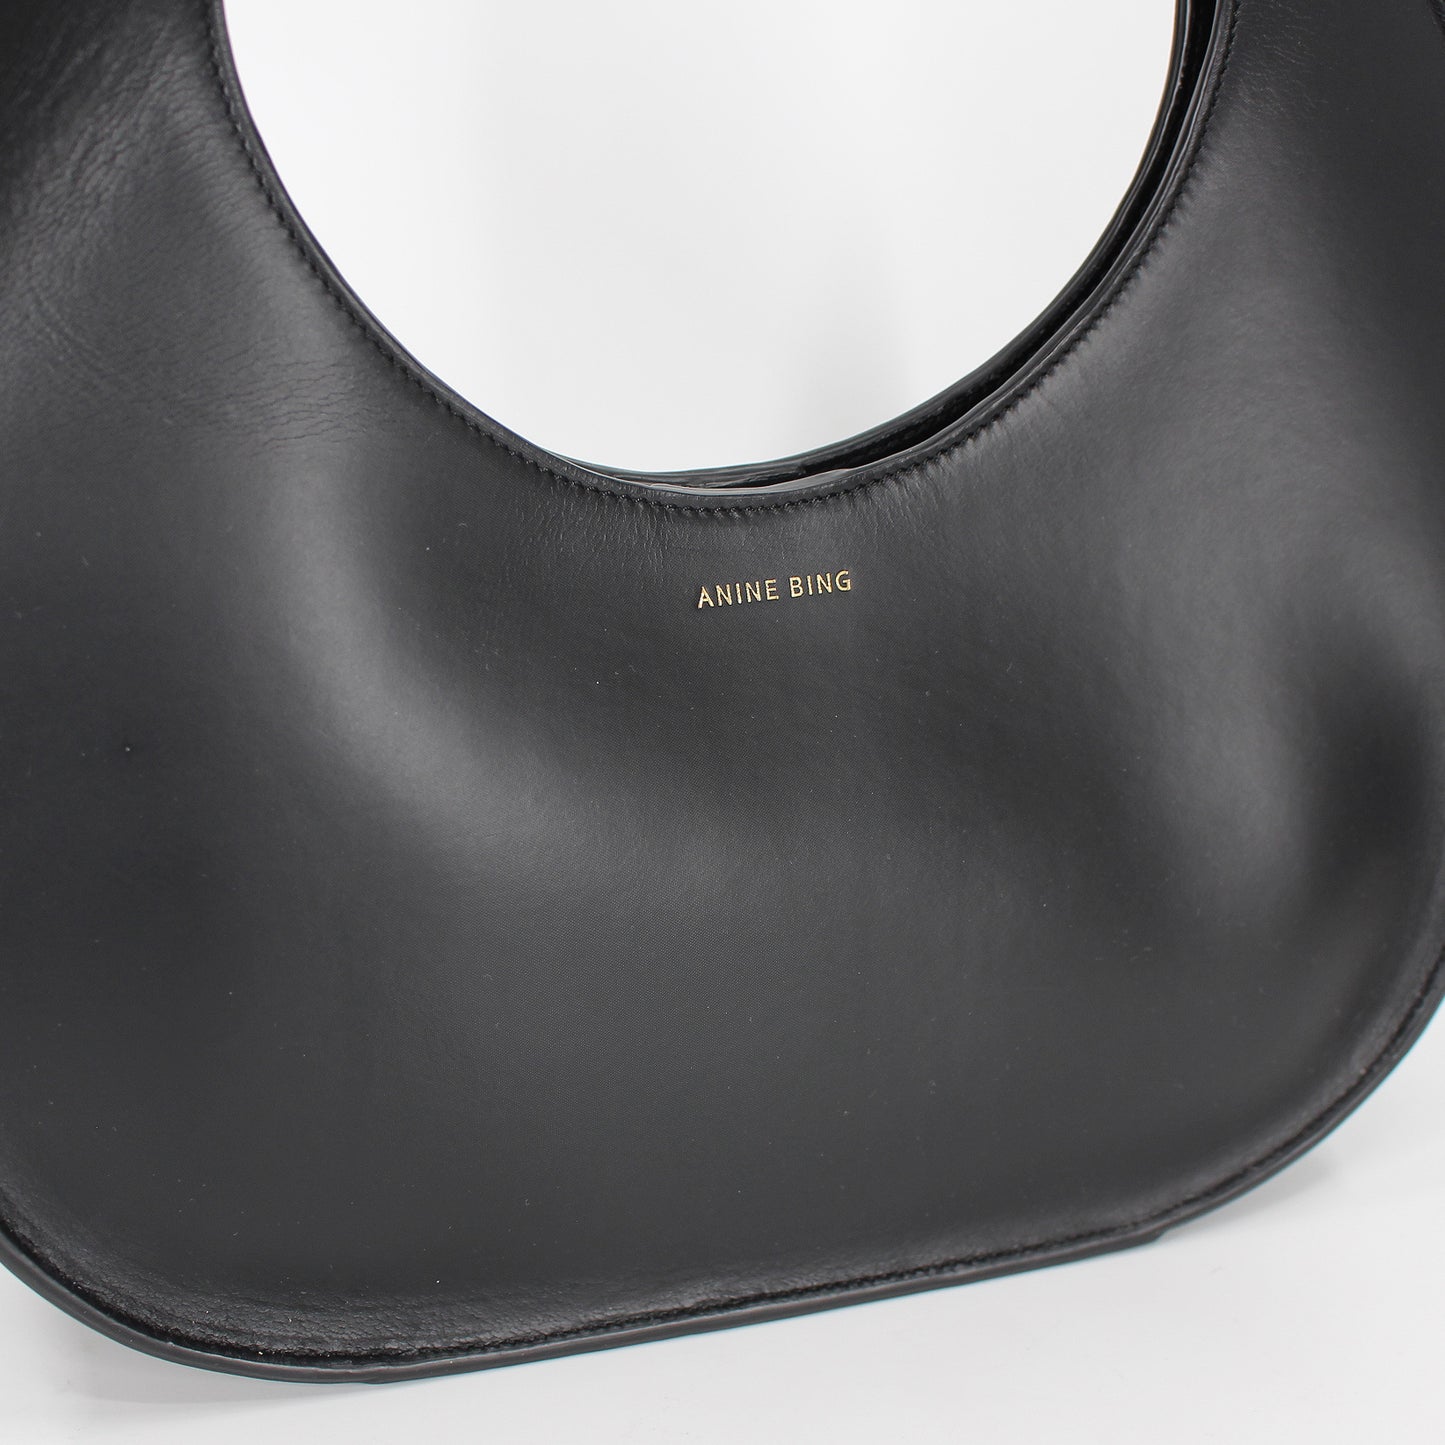 Anine Bing Luna Leather Bag